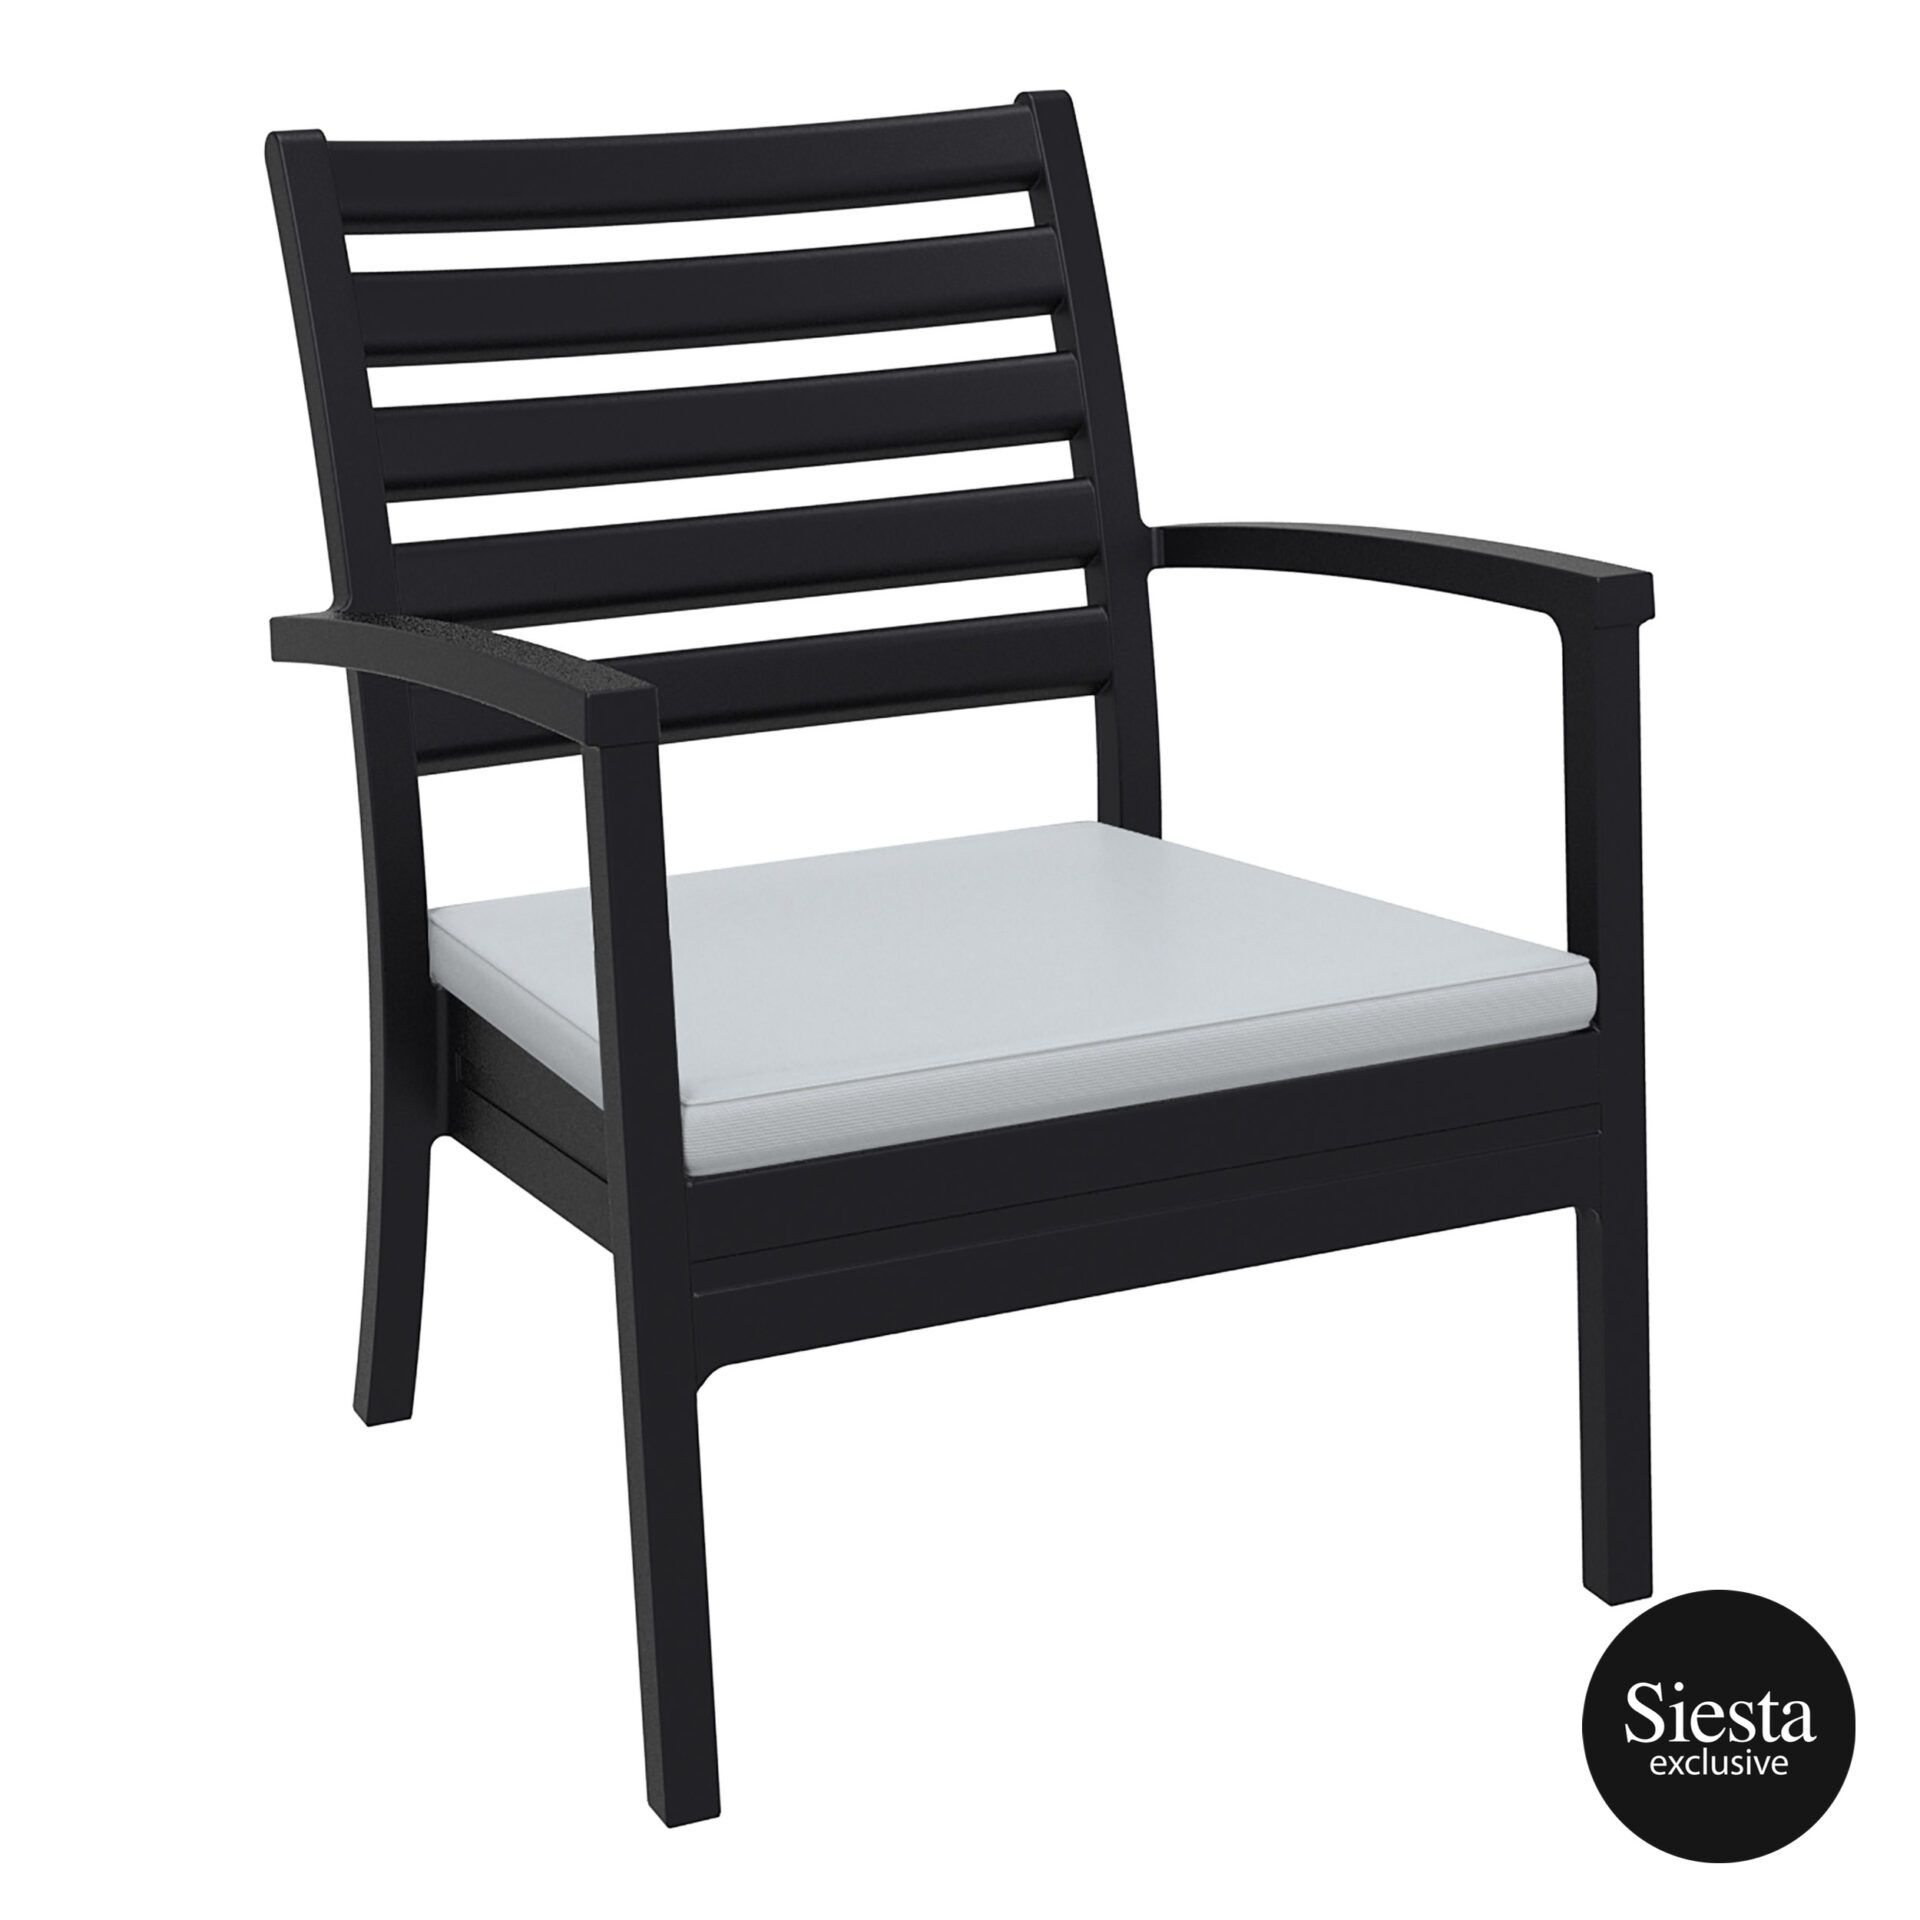 Artemis Xl Seat Cushion lightgrey black front side